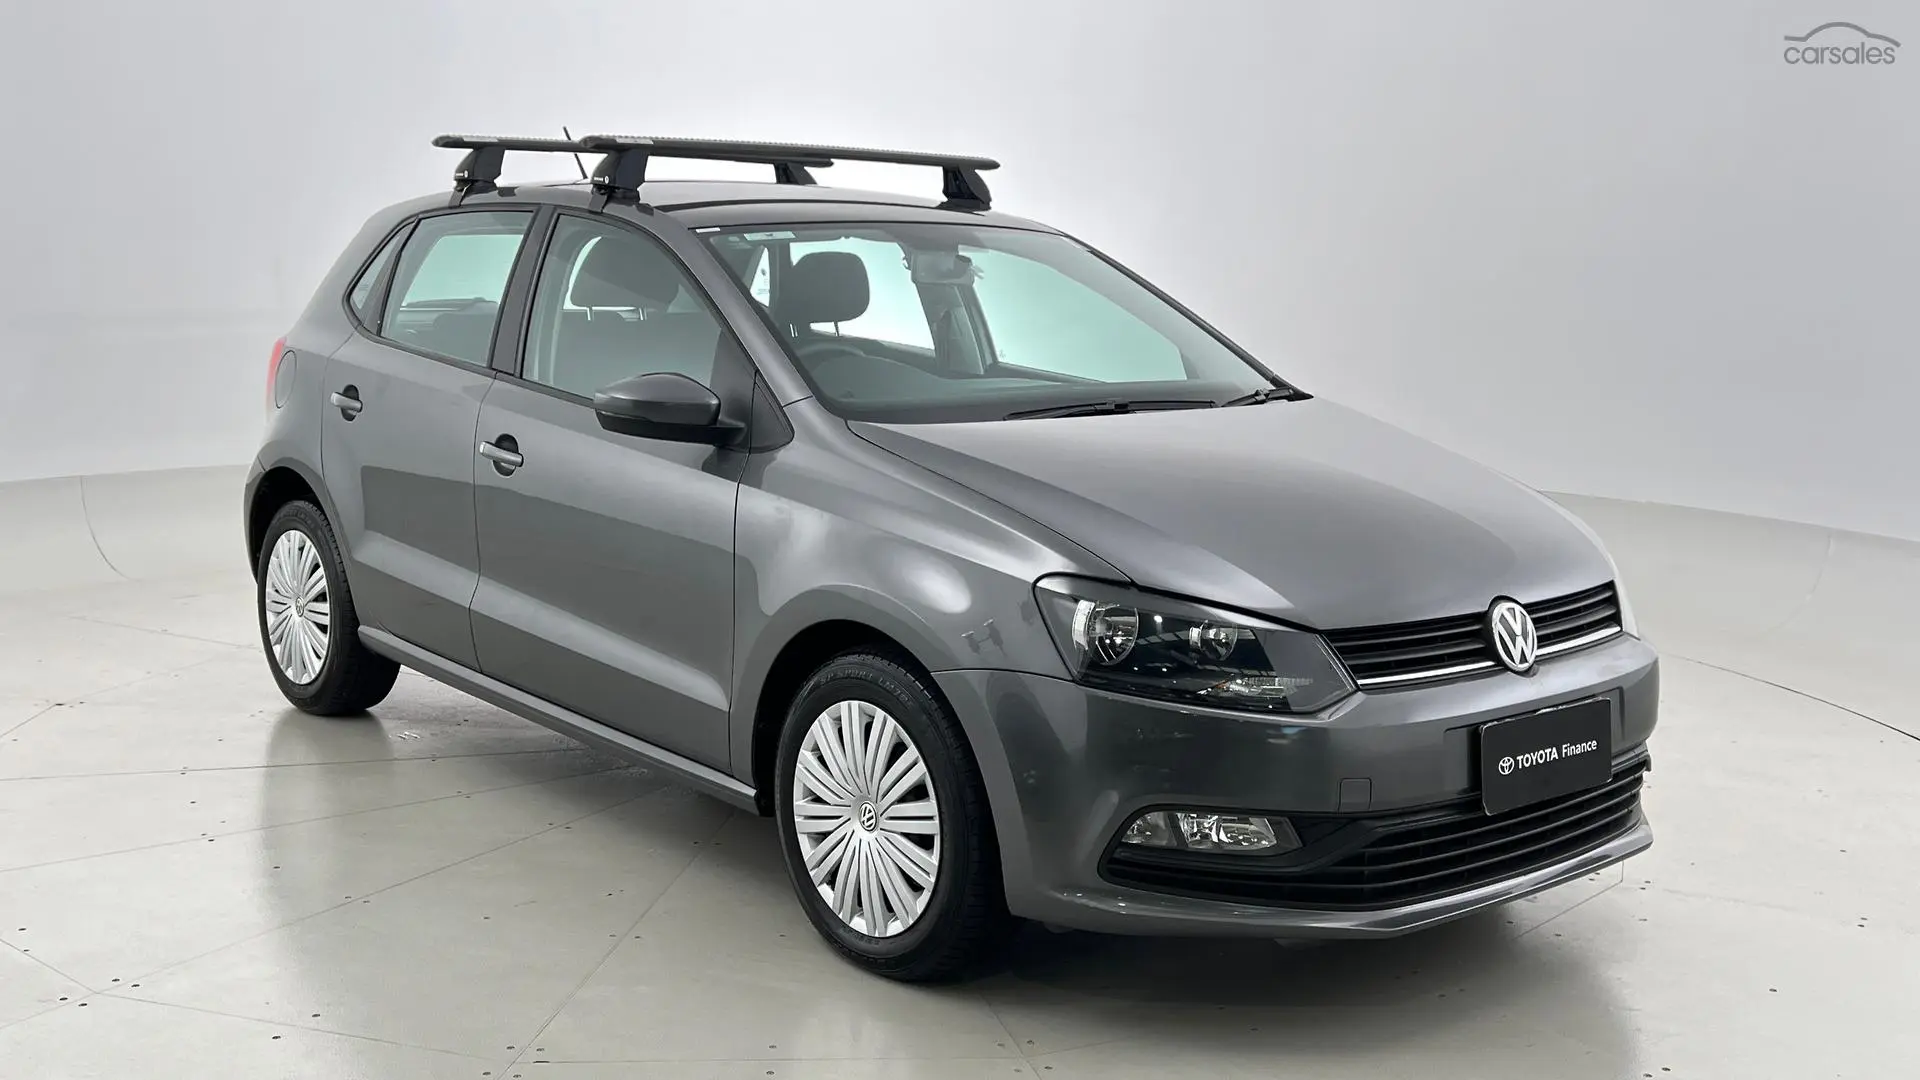 2015 Volkswagen Polo Image 1